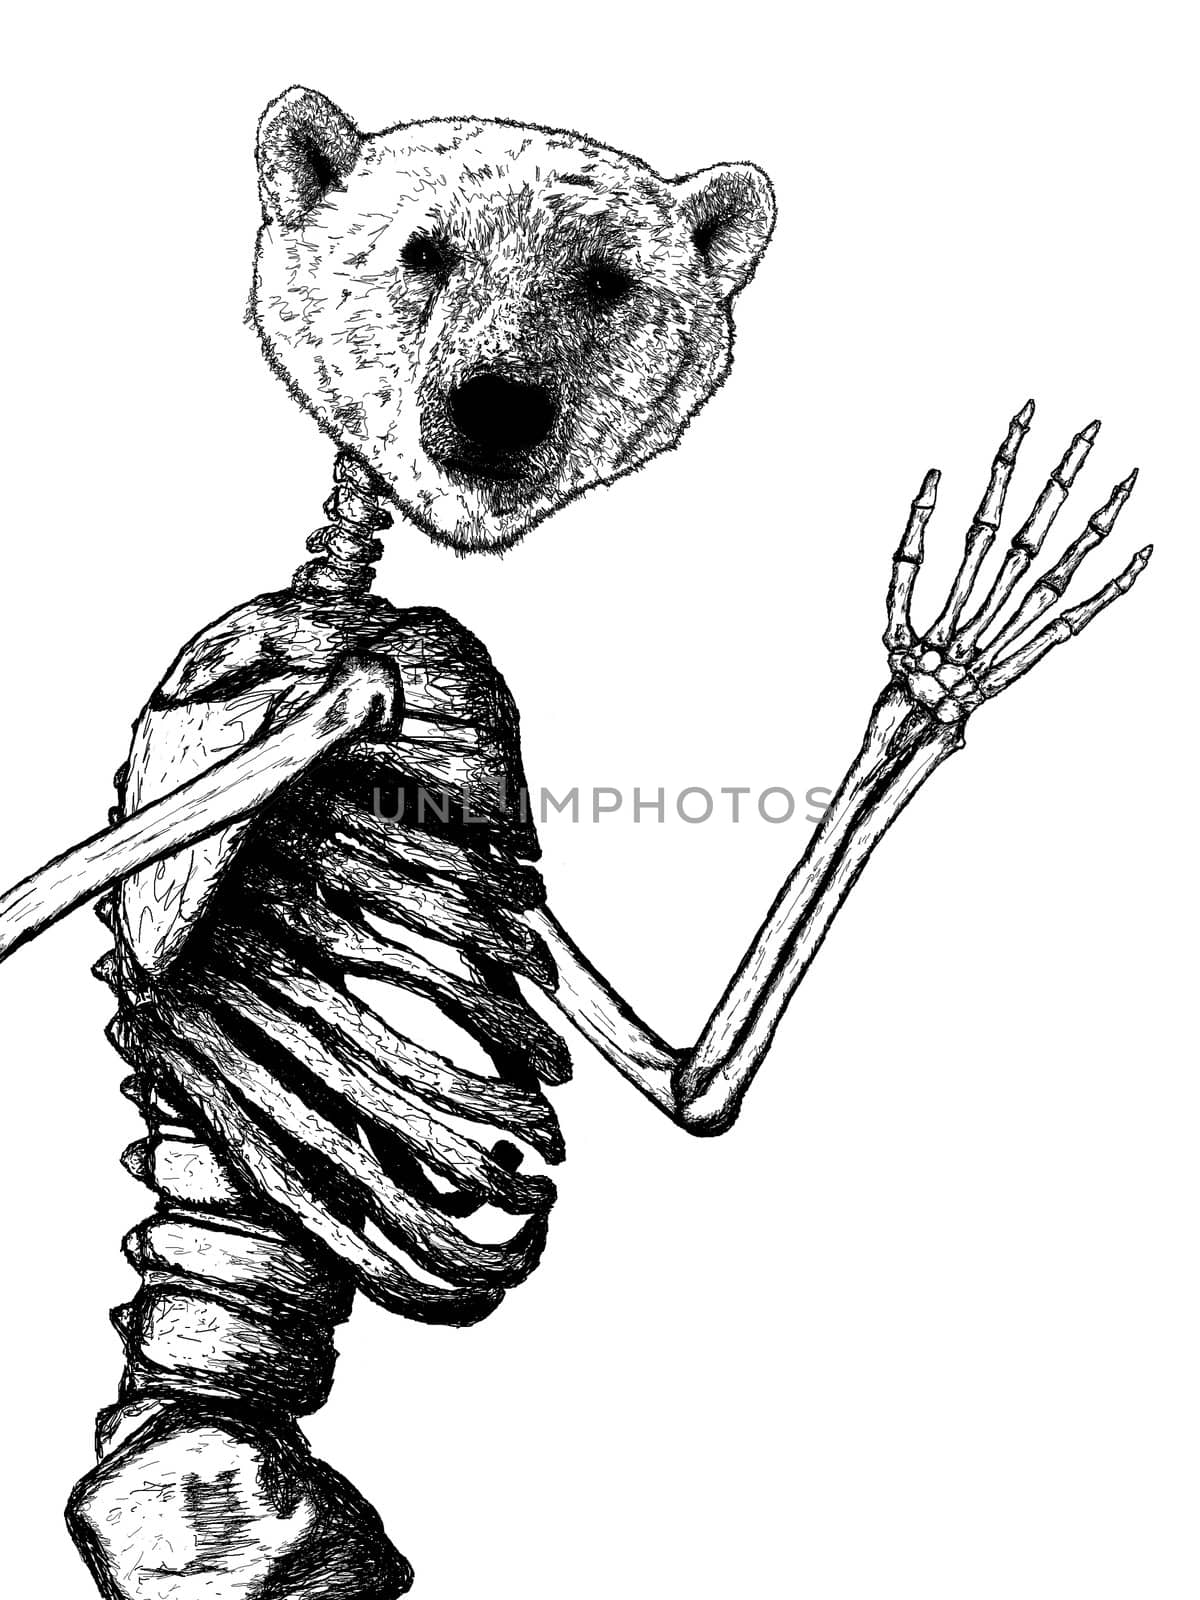 Head of a Polar Bear Illustration on Human Skeleton Waving